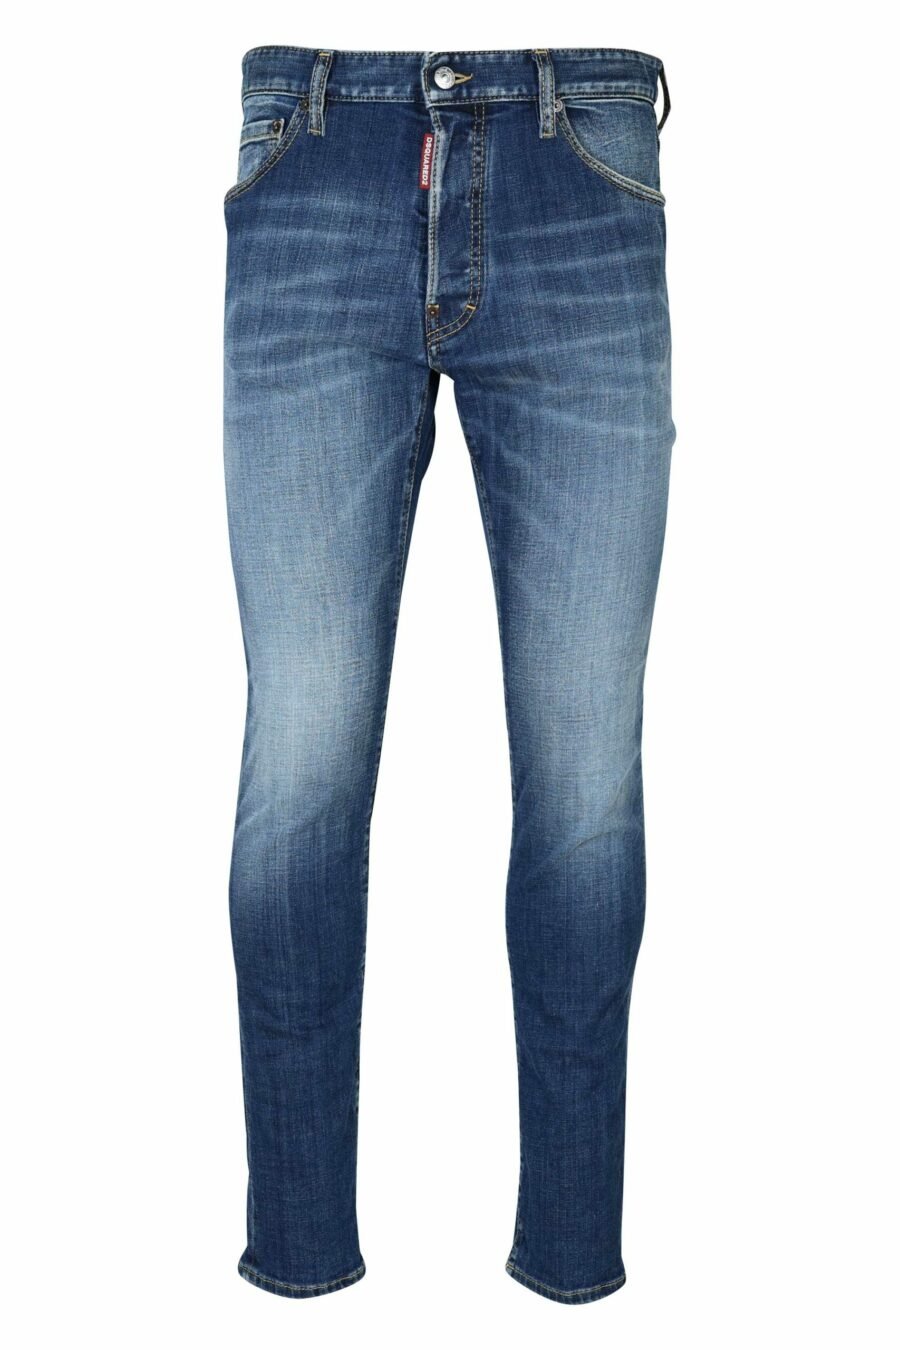 Blue "cool guy jean" semi-sheer denim trousers - 8054148476557 scaled